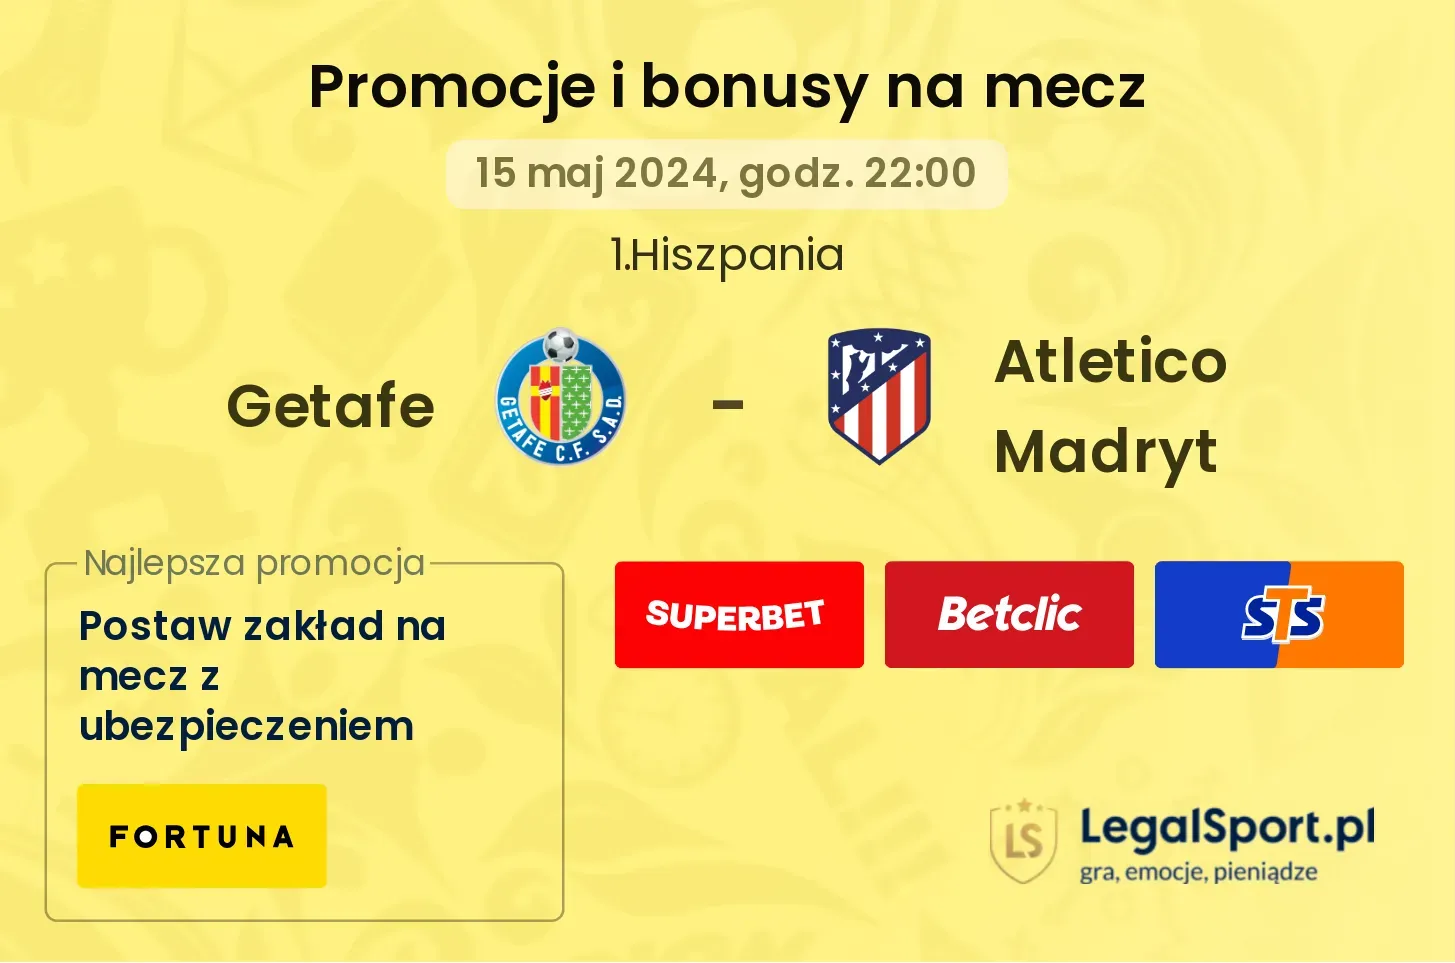 Getafe - Atletico Madryt promocje i bonusy (15.05, 22:00)